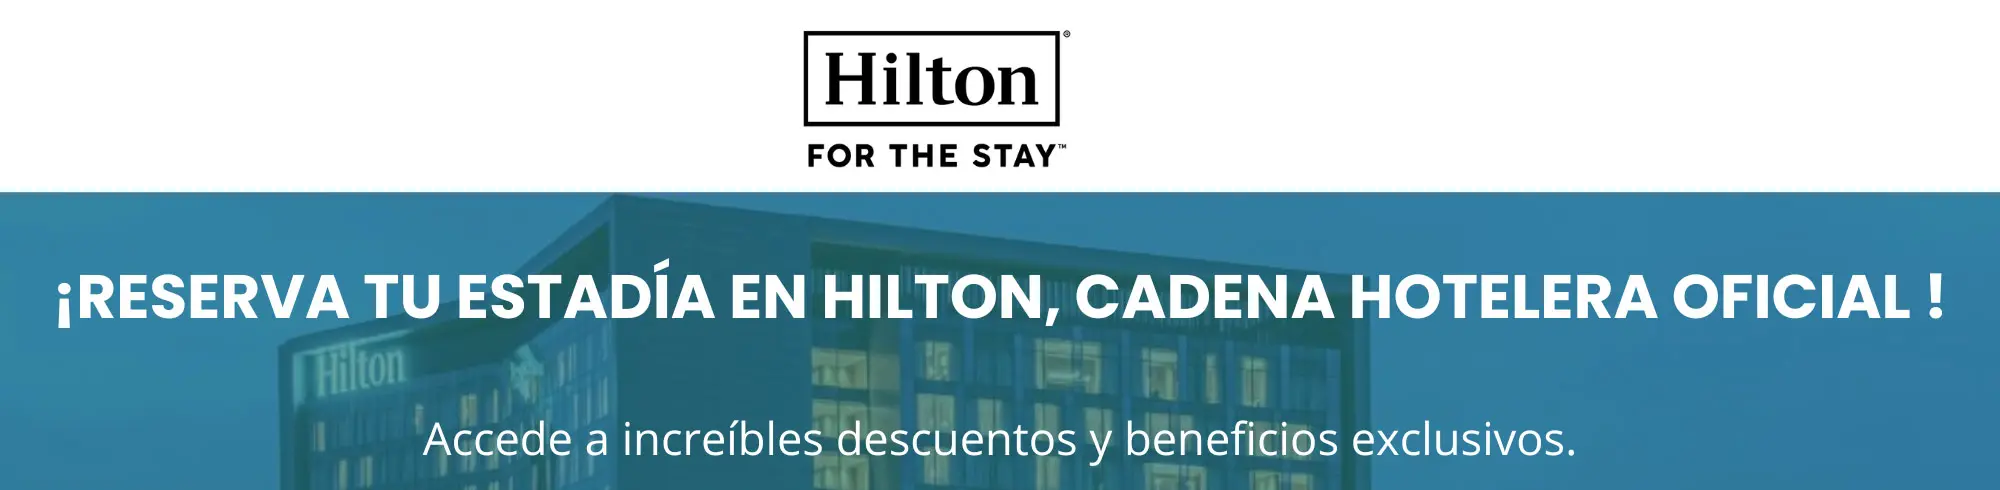 imagen Hotel Hilton